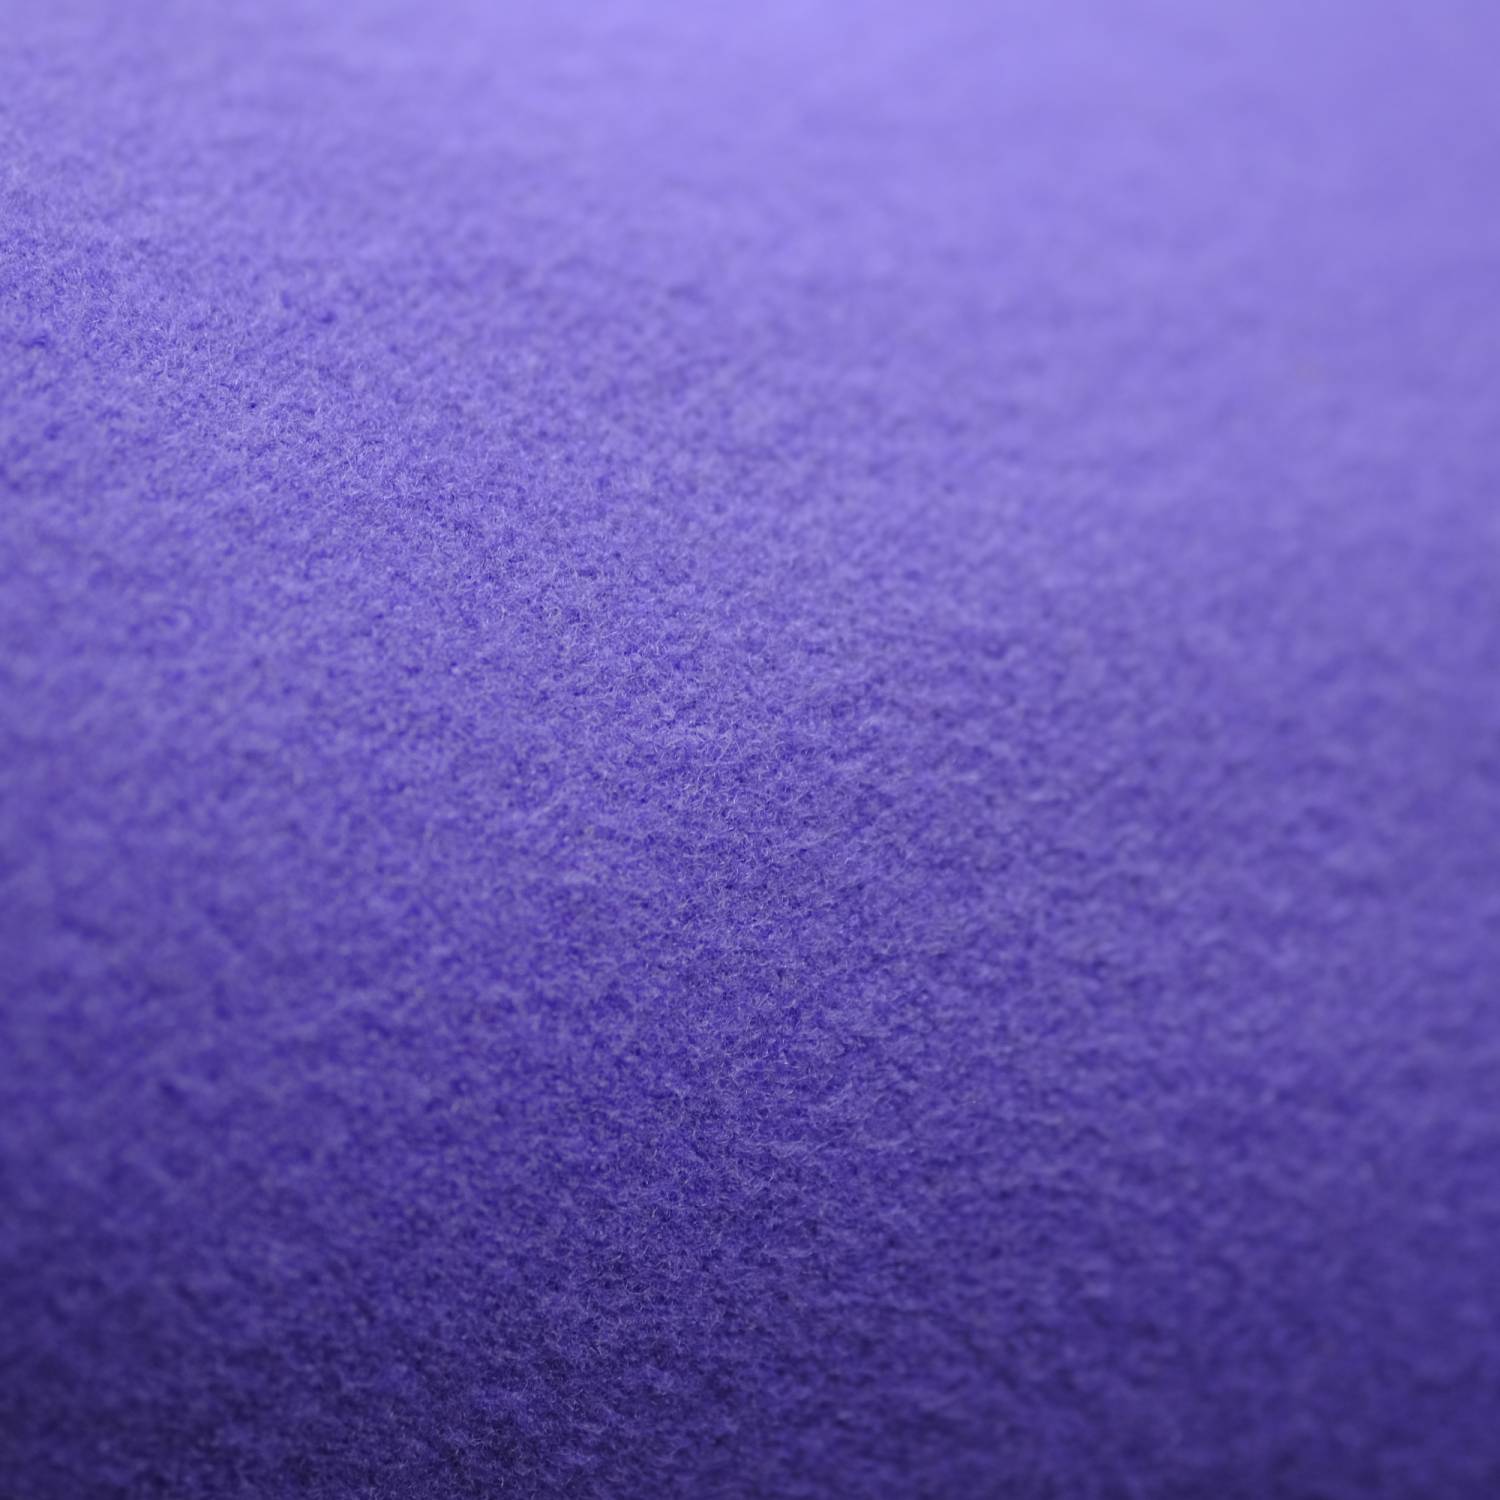 Microfibre Sports/Beach Towels in Purple up close image